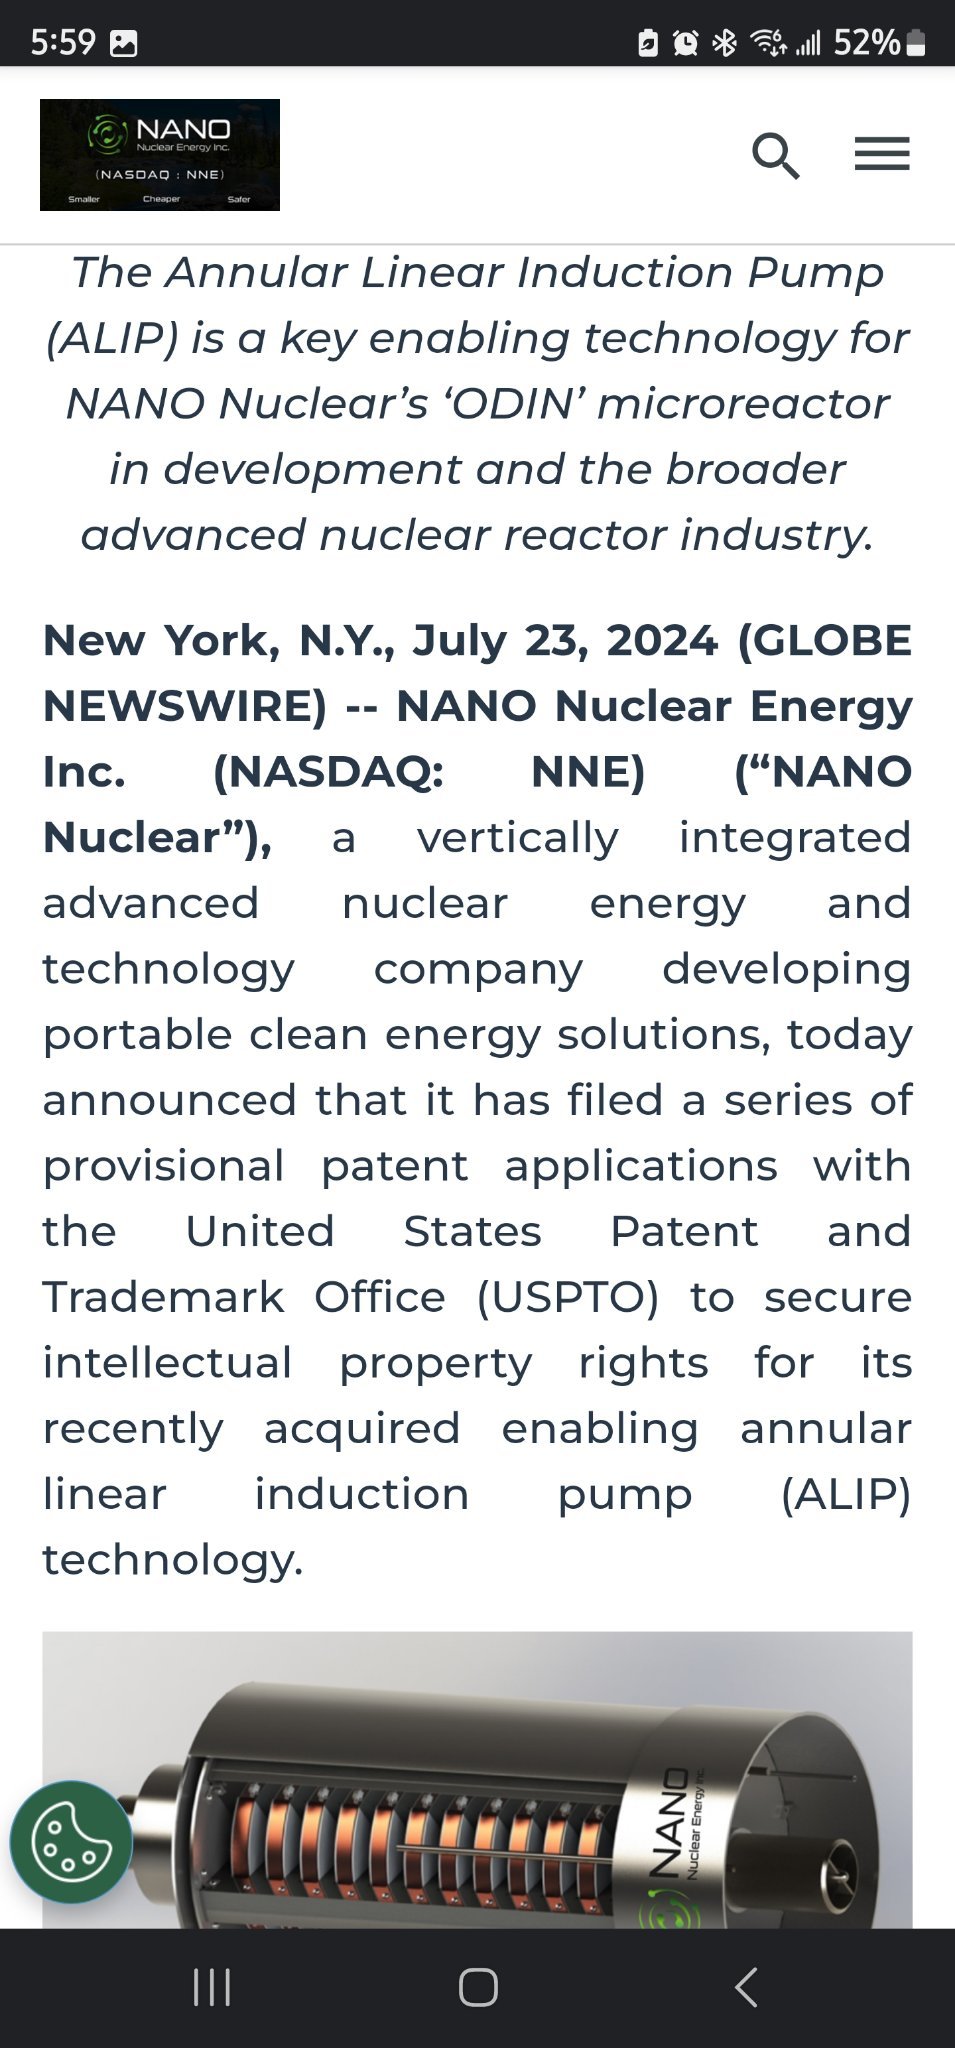 News update from NANO company.